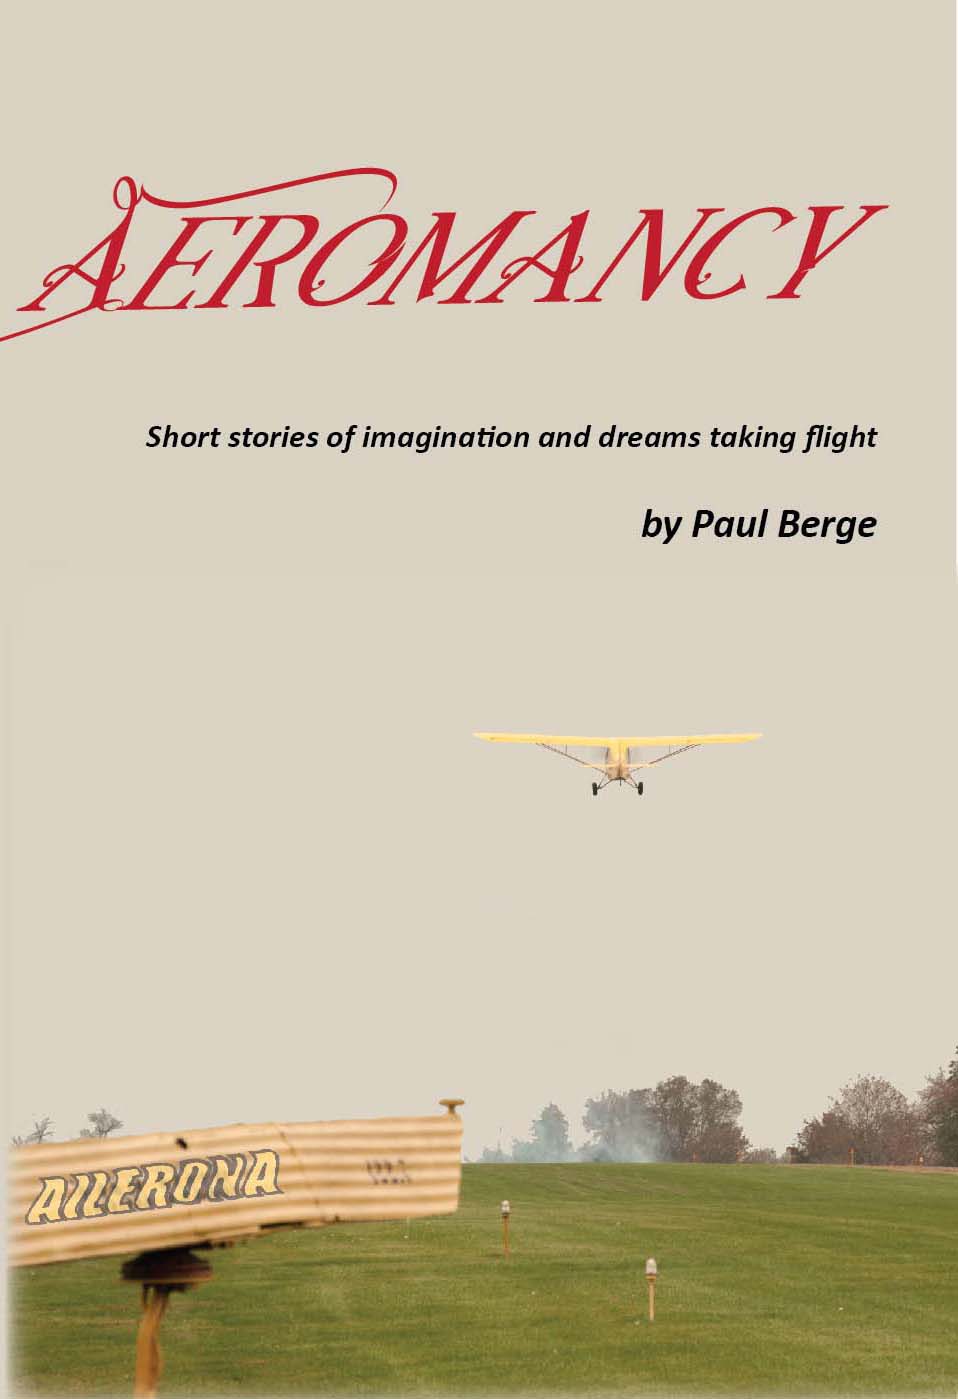 Aeromancy